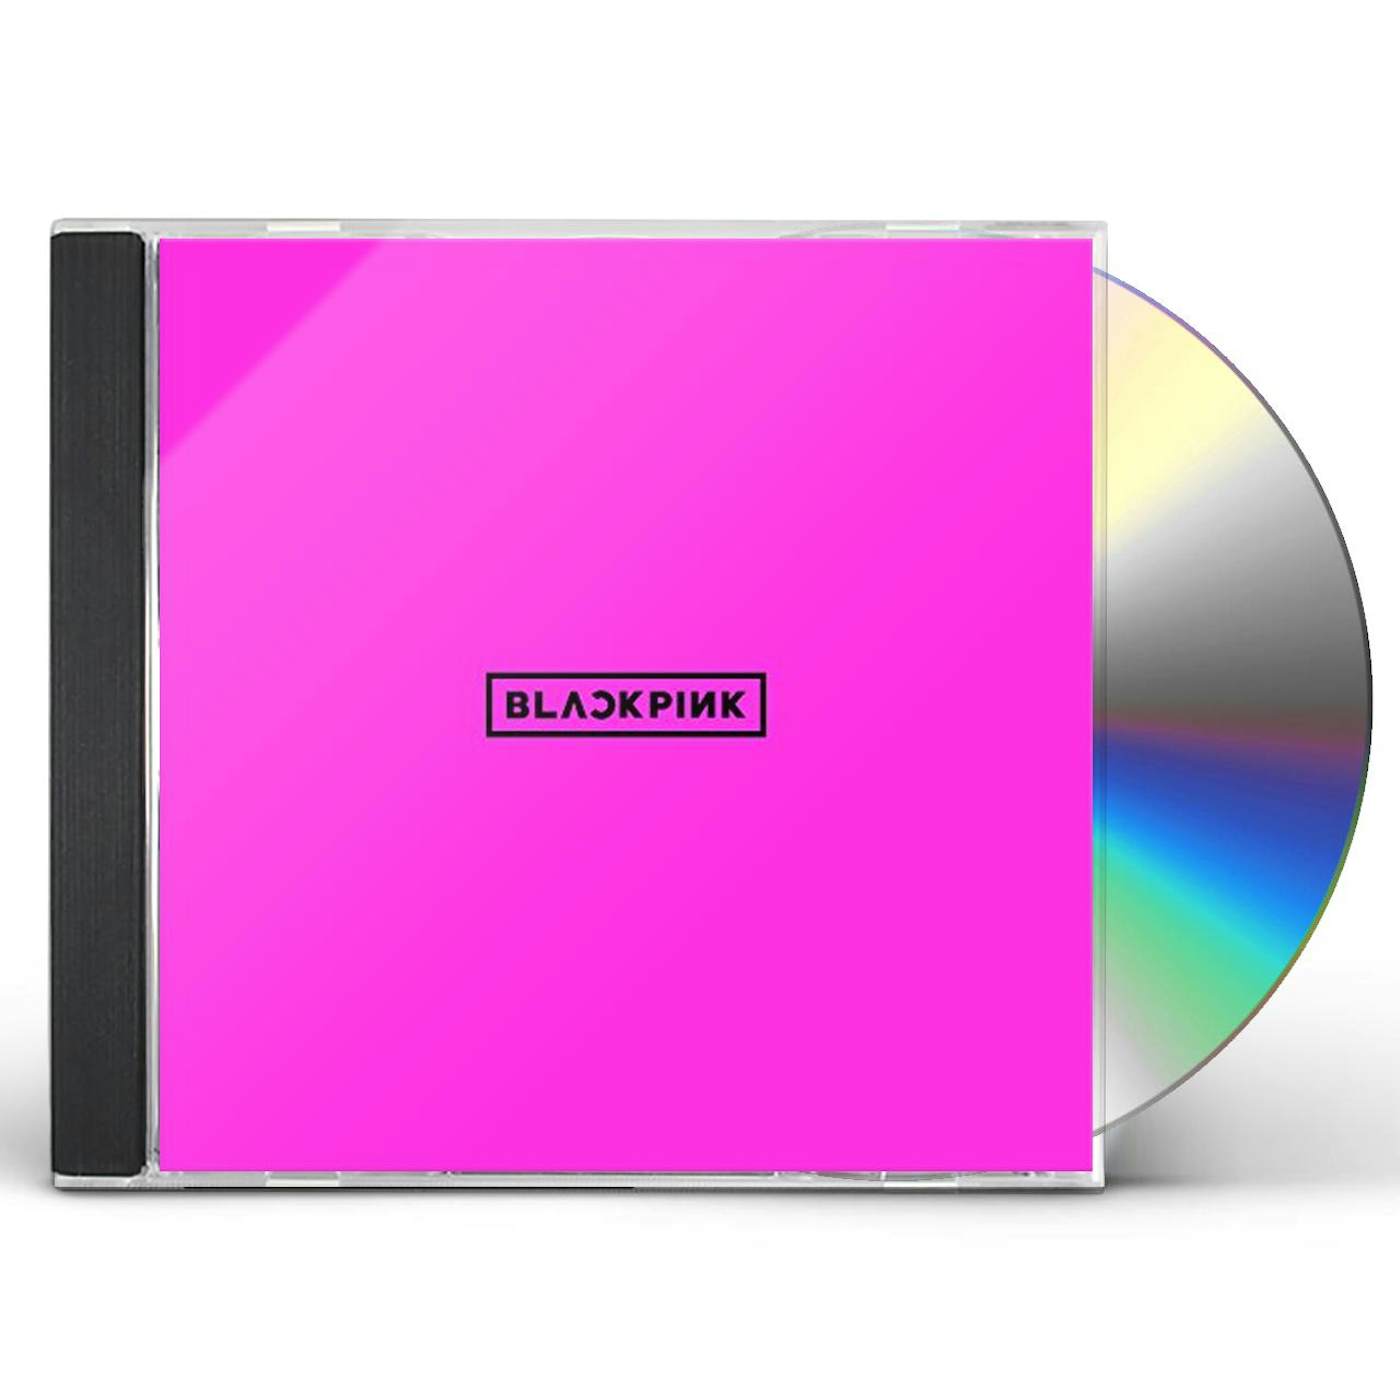 BLACKPINK EP: SPECIAL EDITION CD